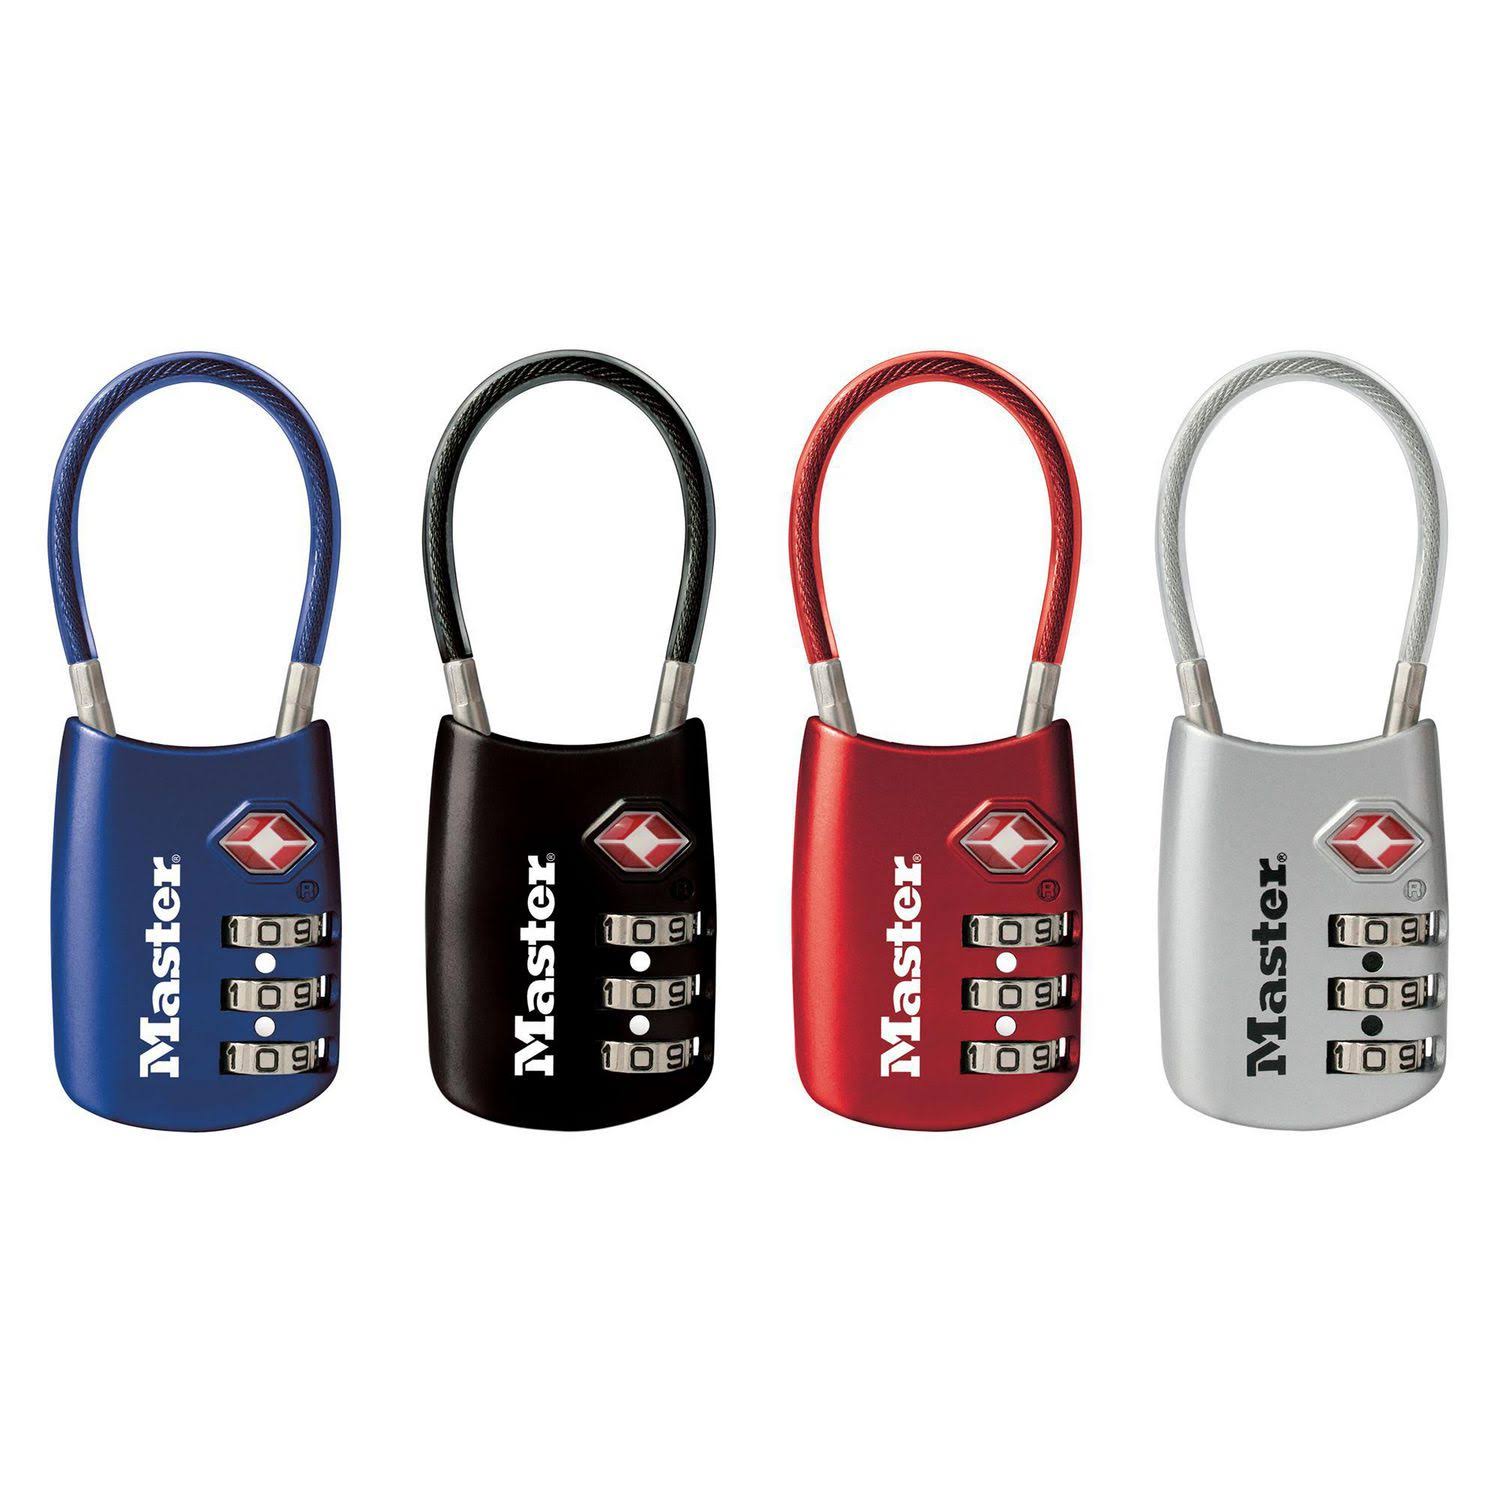 Master Lock Luggage Combination Lock